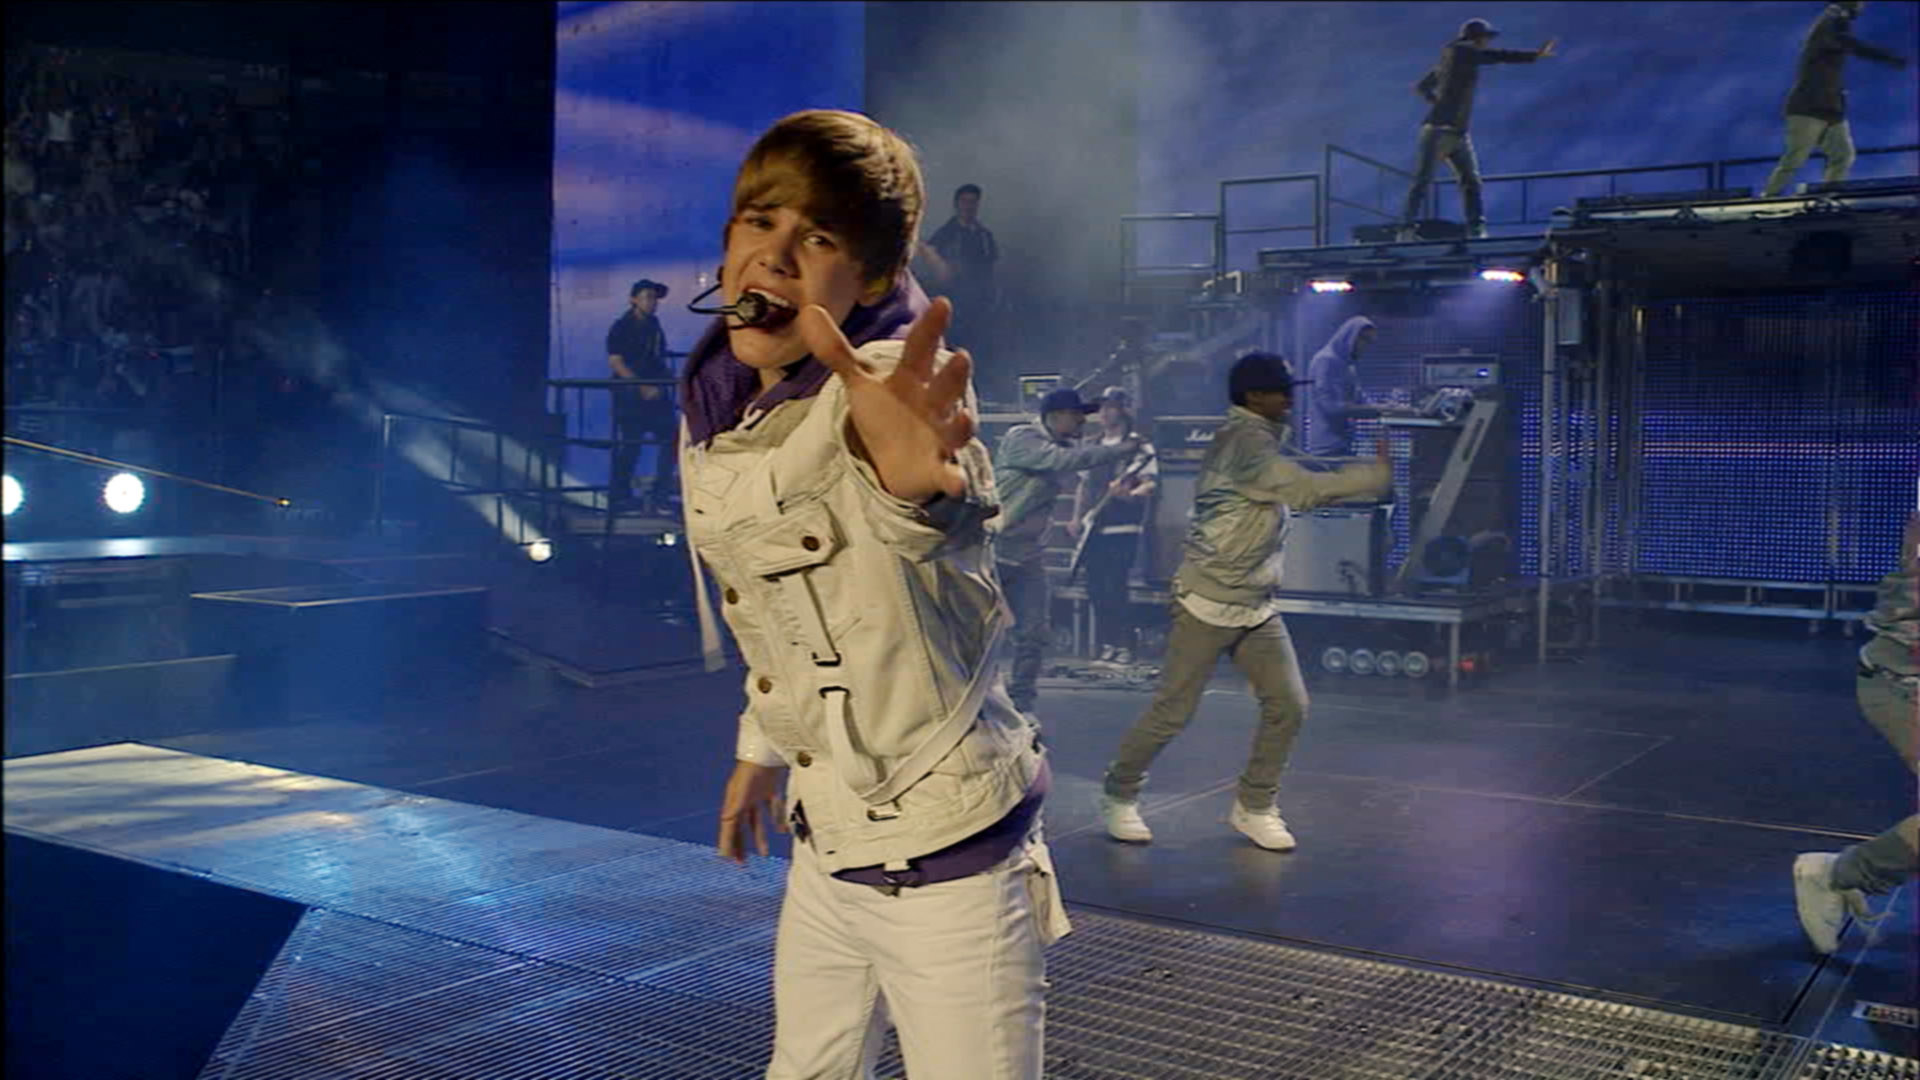 Justin Bieber performs at a concert